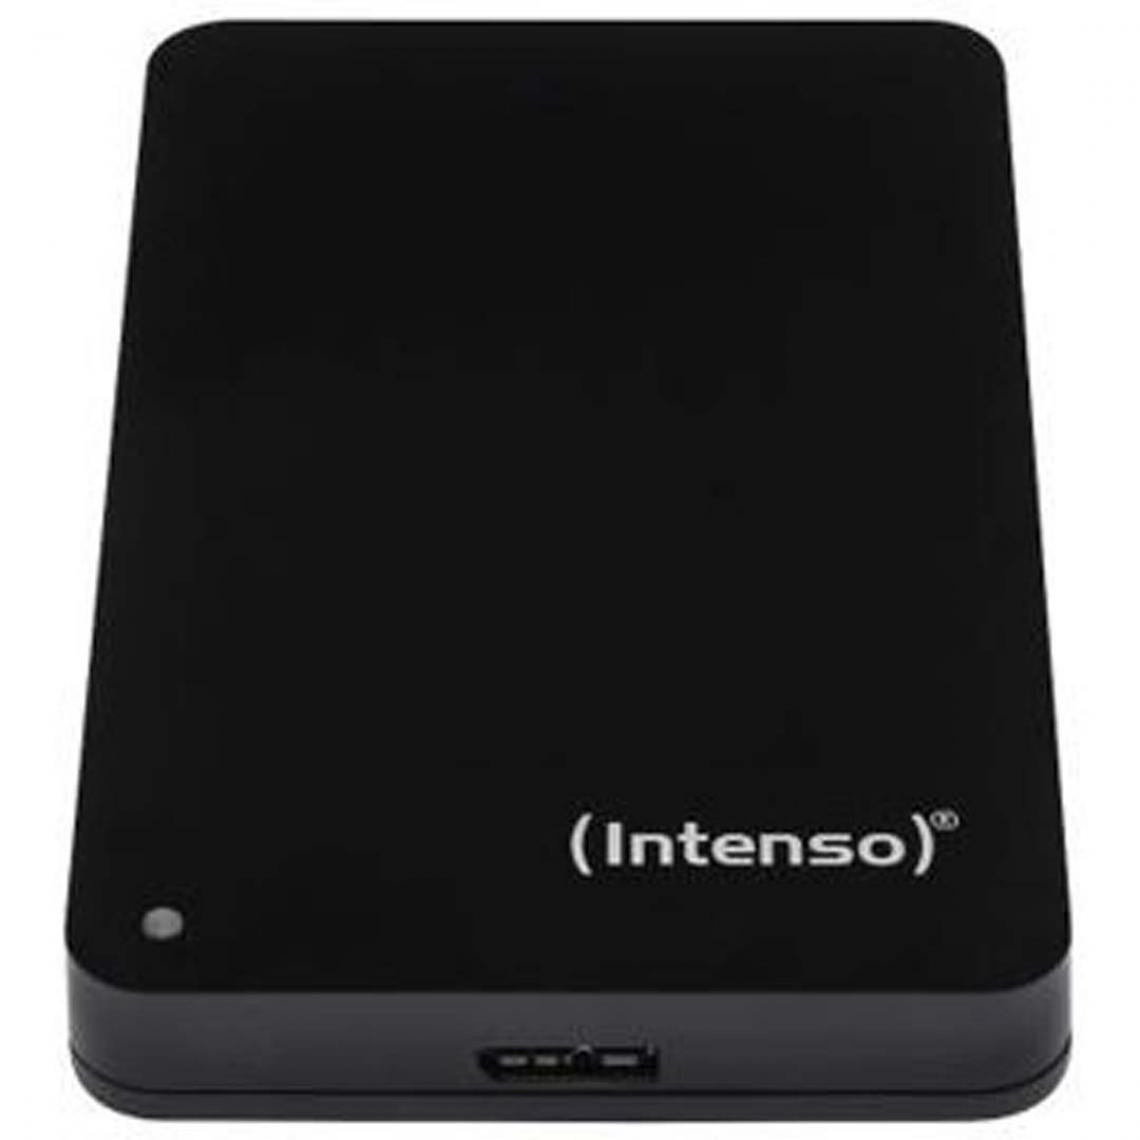 Intenso - Disque dur USB 3.0 320Go INTENSO Noir - Disque Dur interne